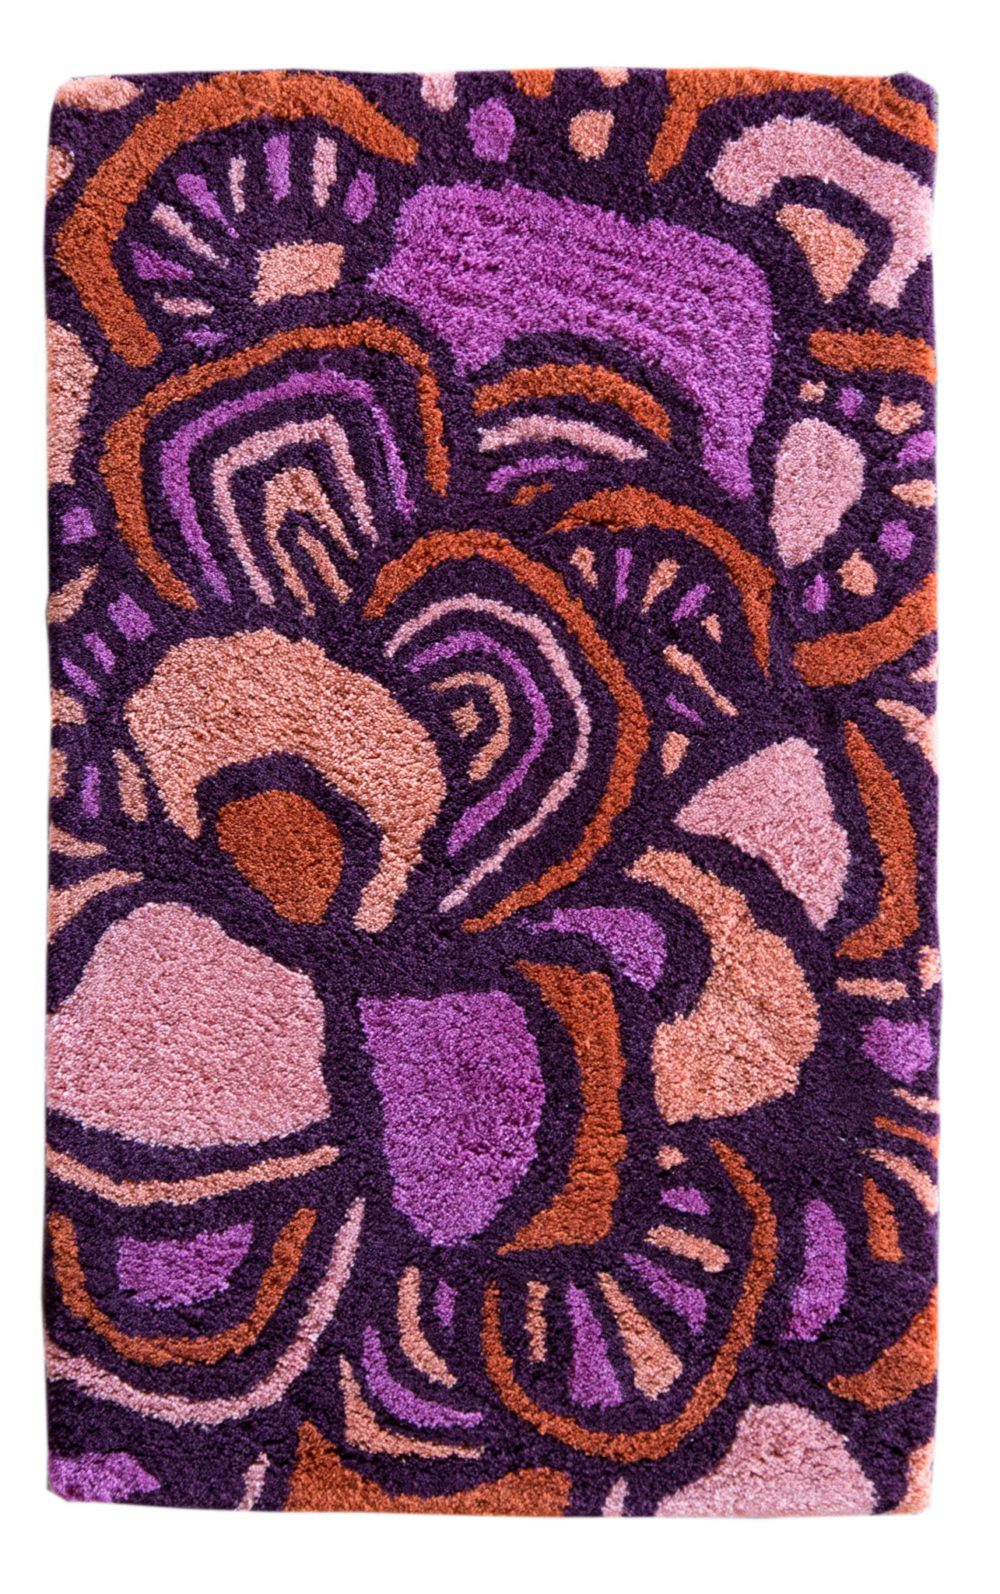 Image result for handmade rugs